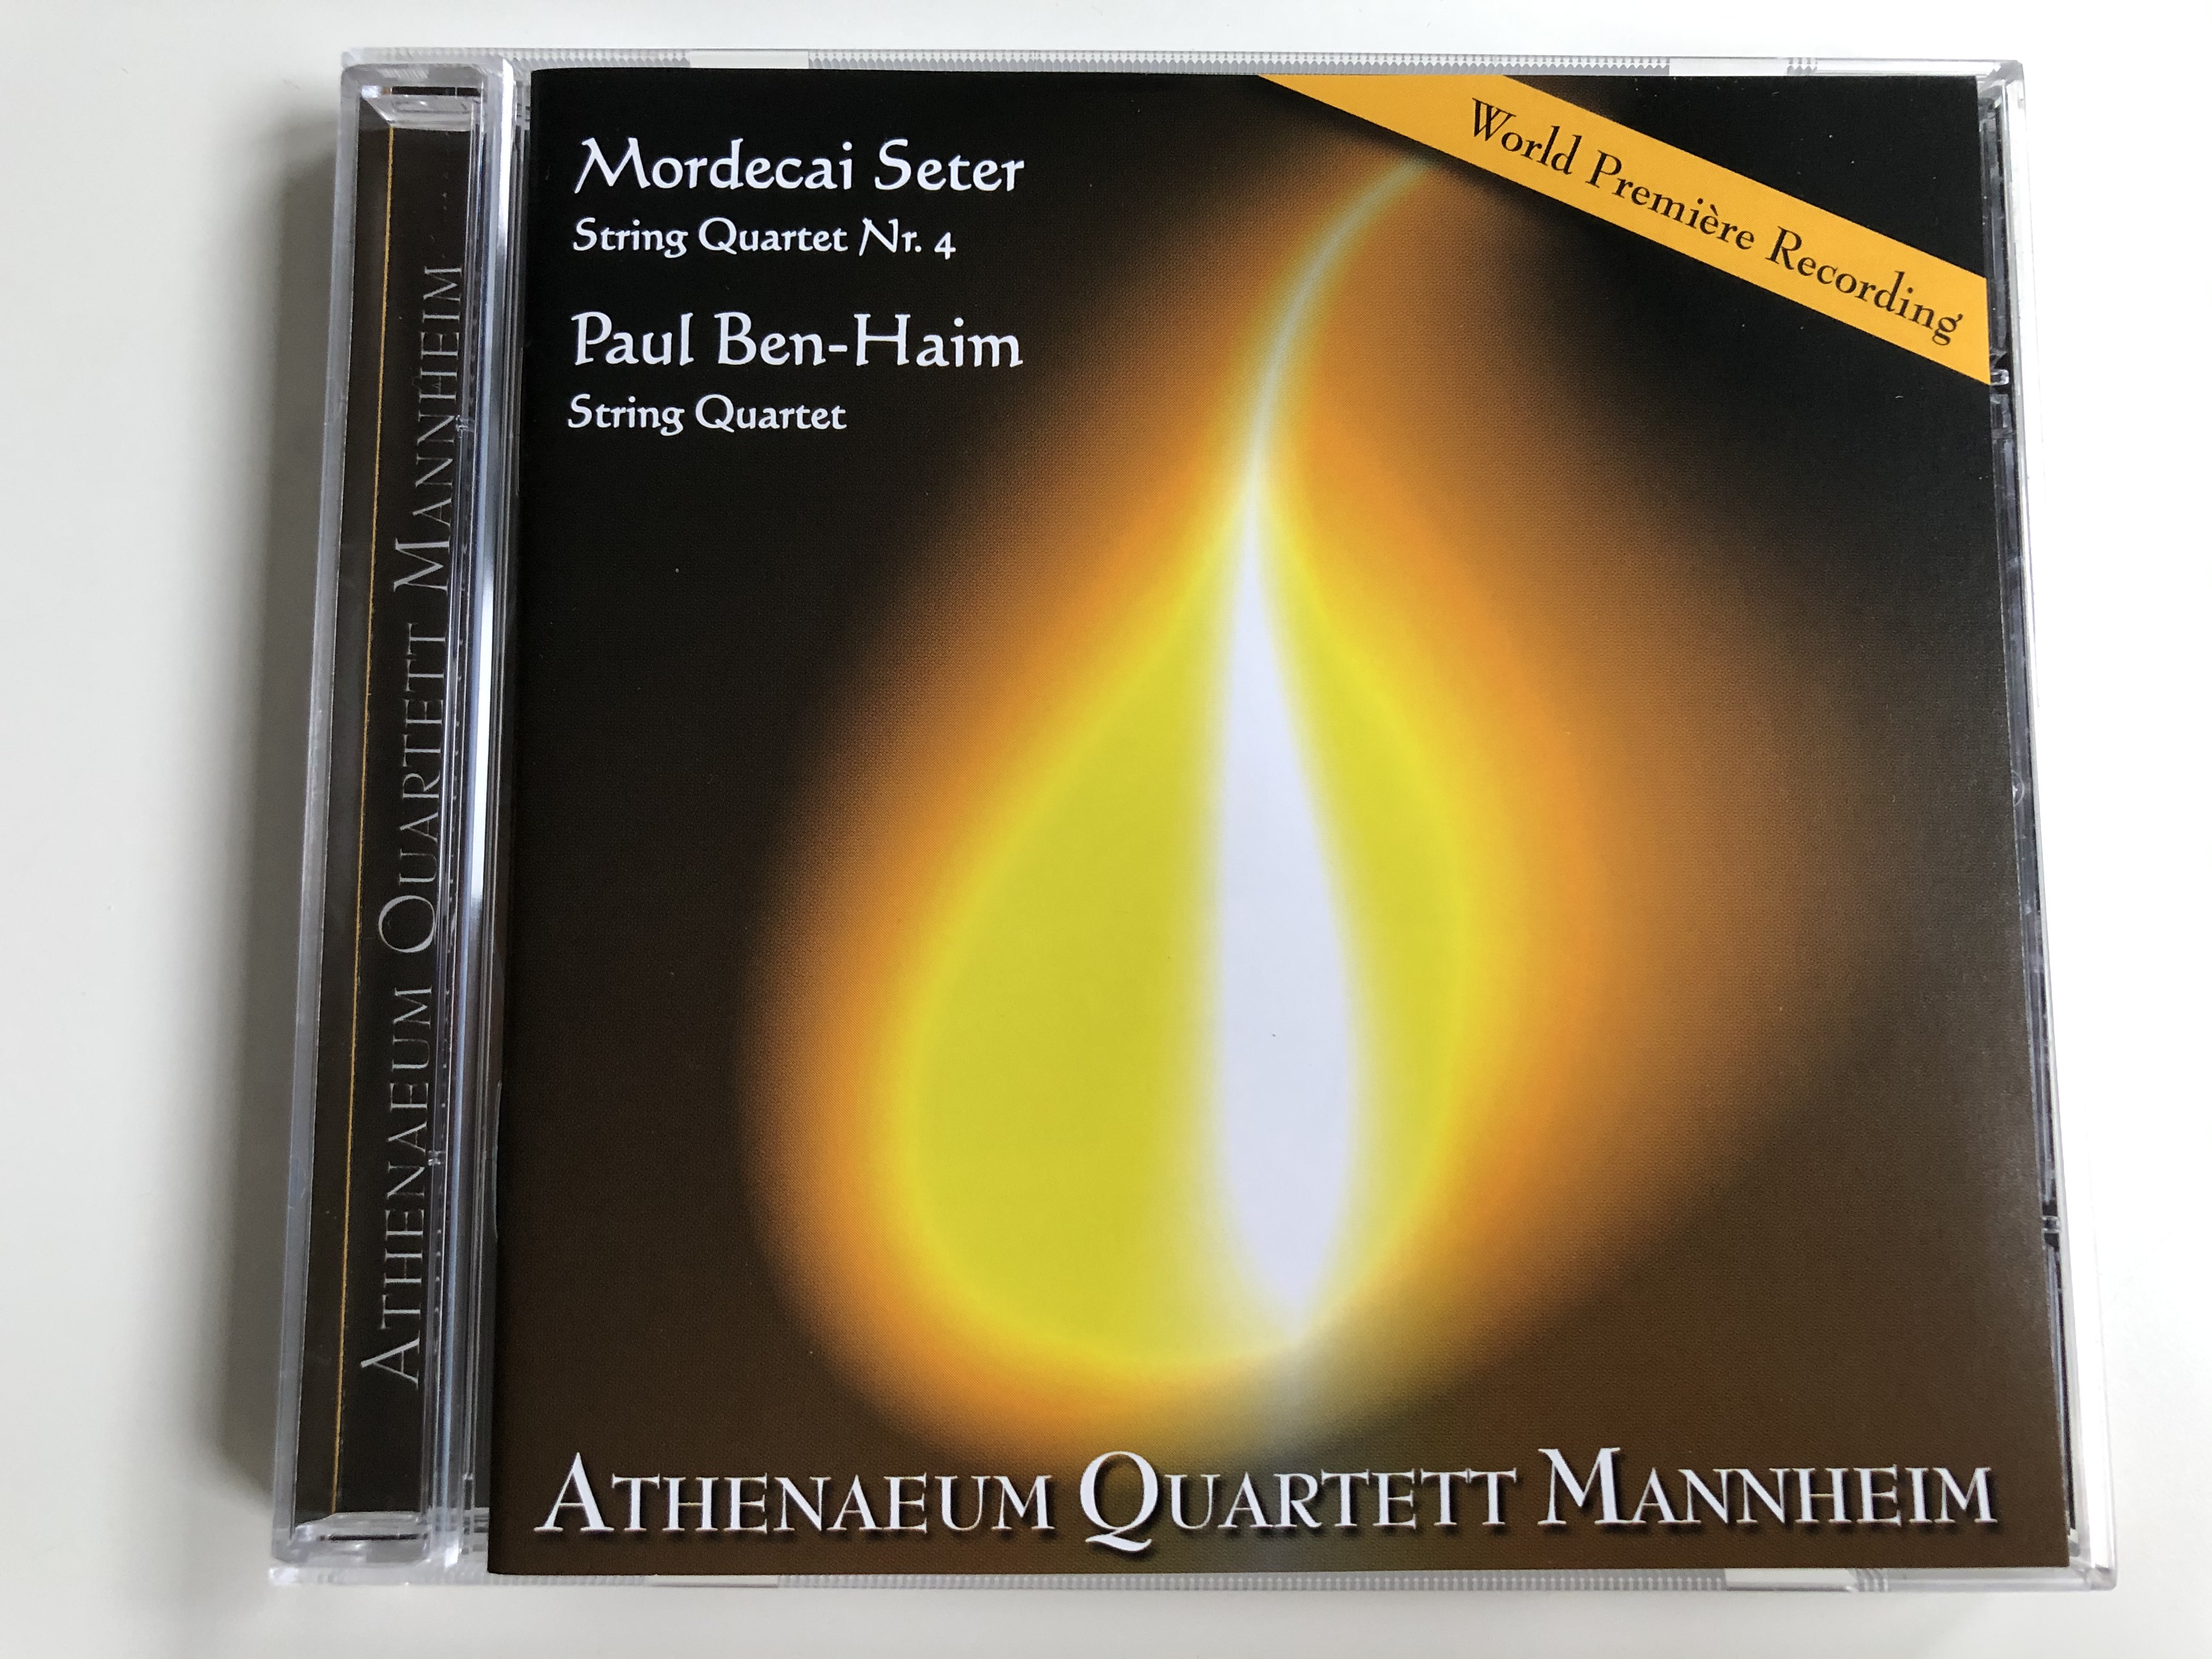 mordecai-seter-string-quartet-nr.4-paul-ben-haim-string-quartet-athenaeum-quartett-mannheim-ars-sonadi-audio-cd-2006-1-.jpg